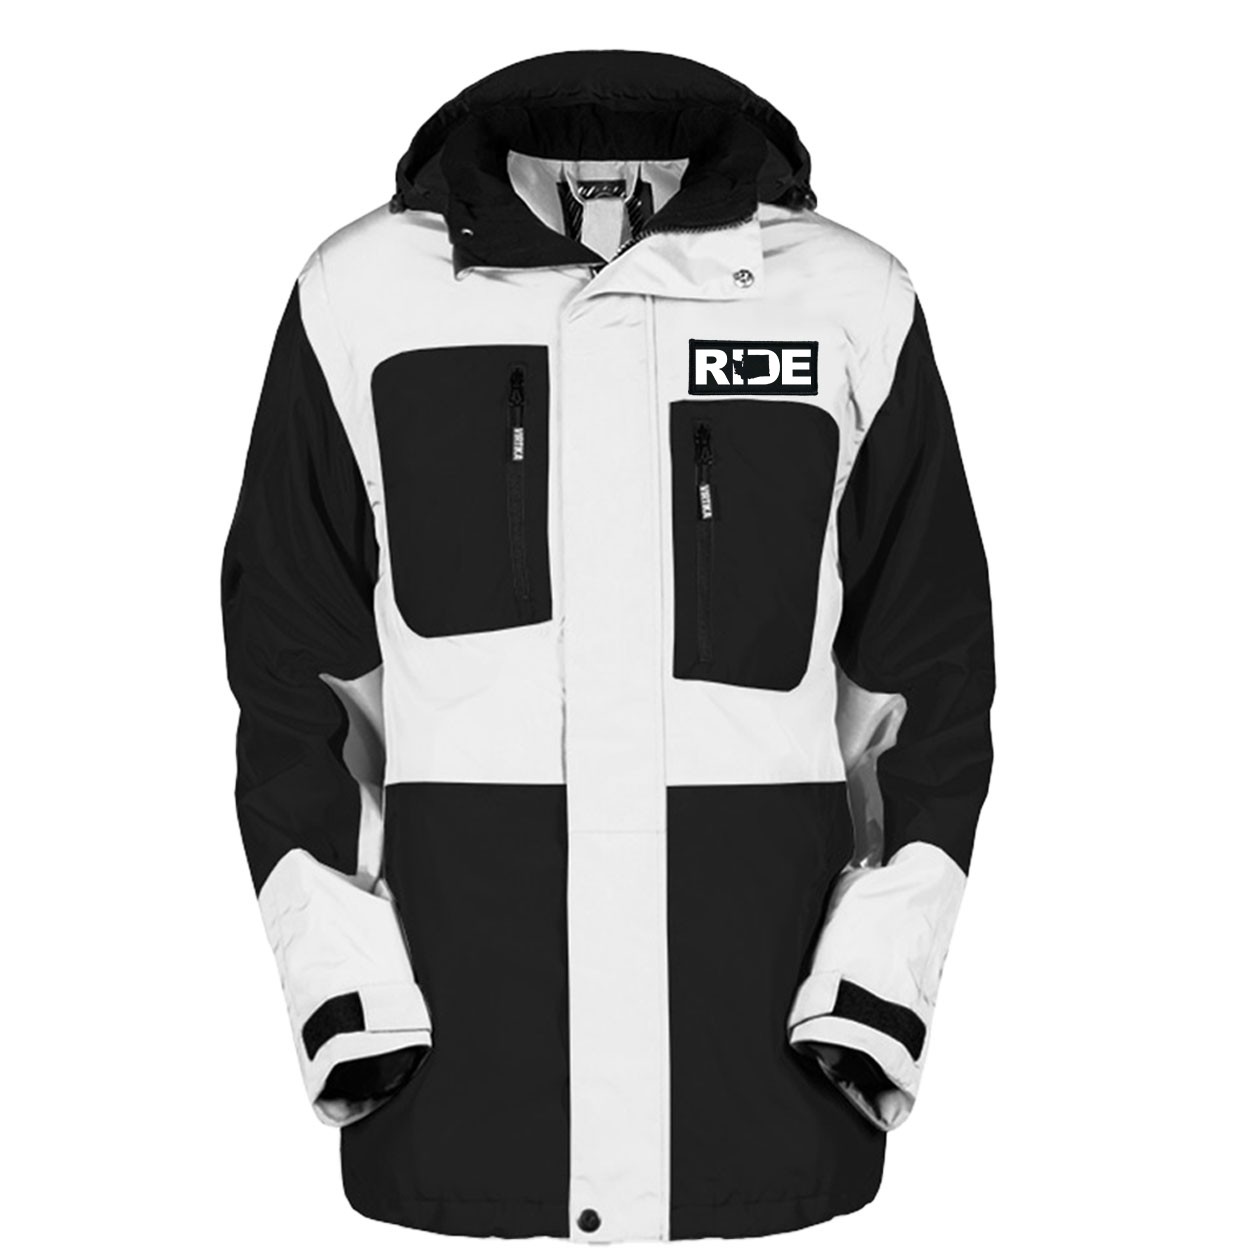 Ride Washington Classic Woven Patch Pro Snowboard Jacket (Black/White)